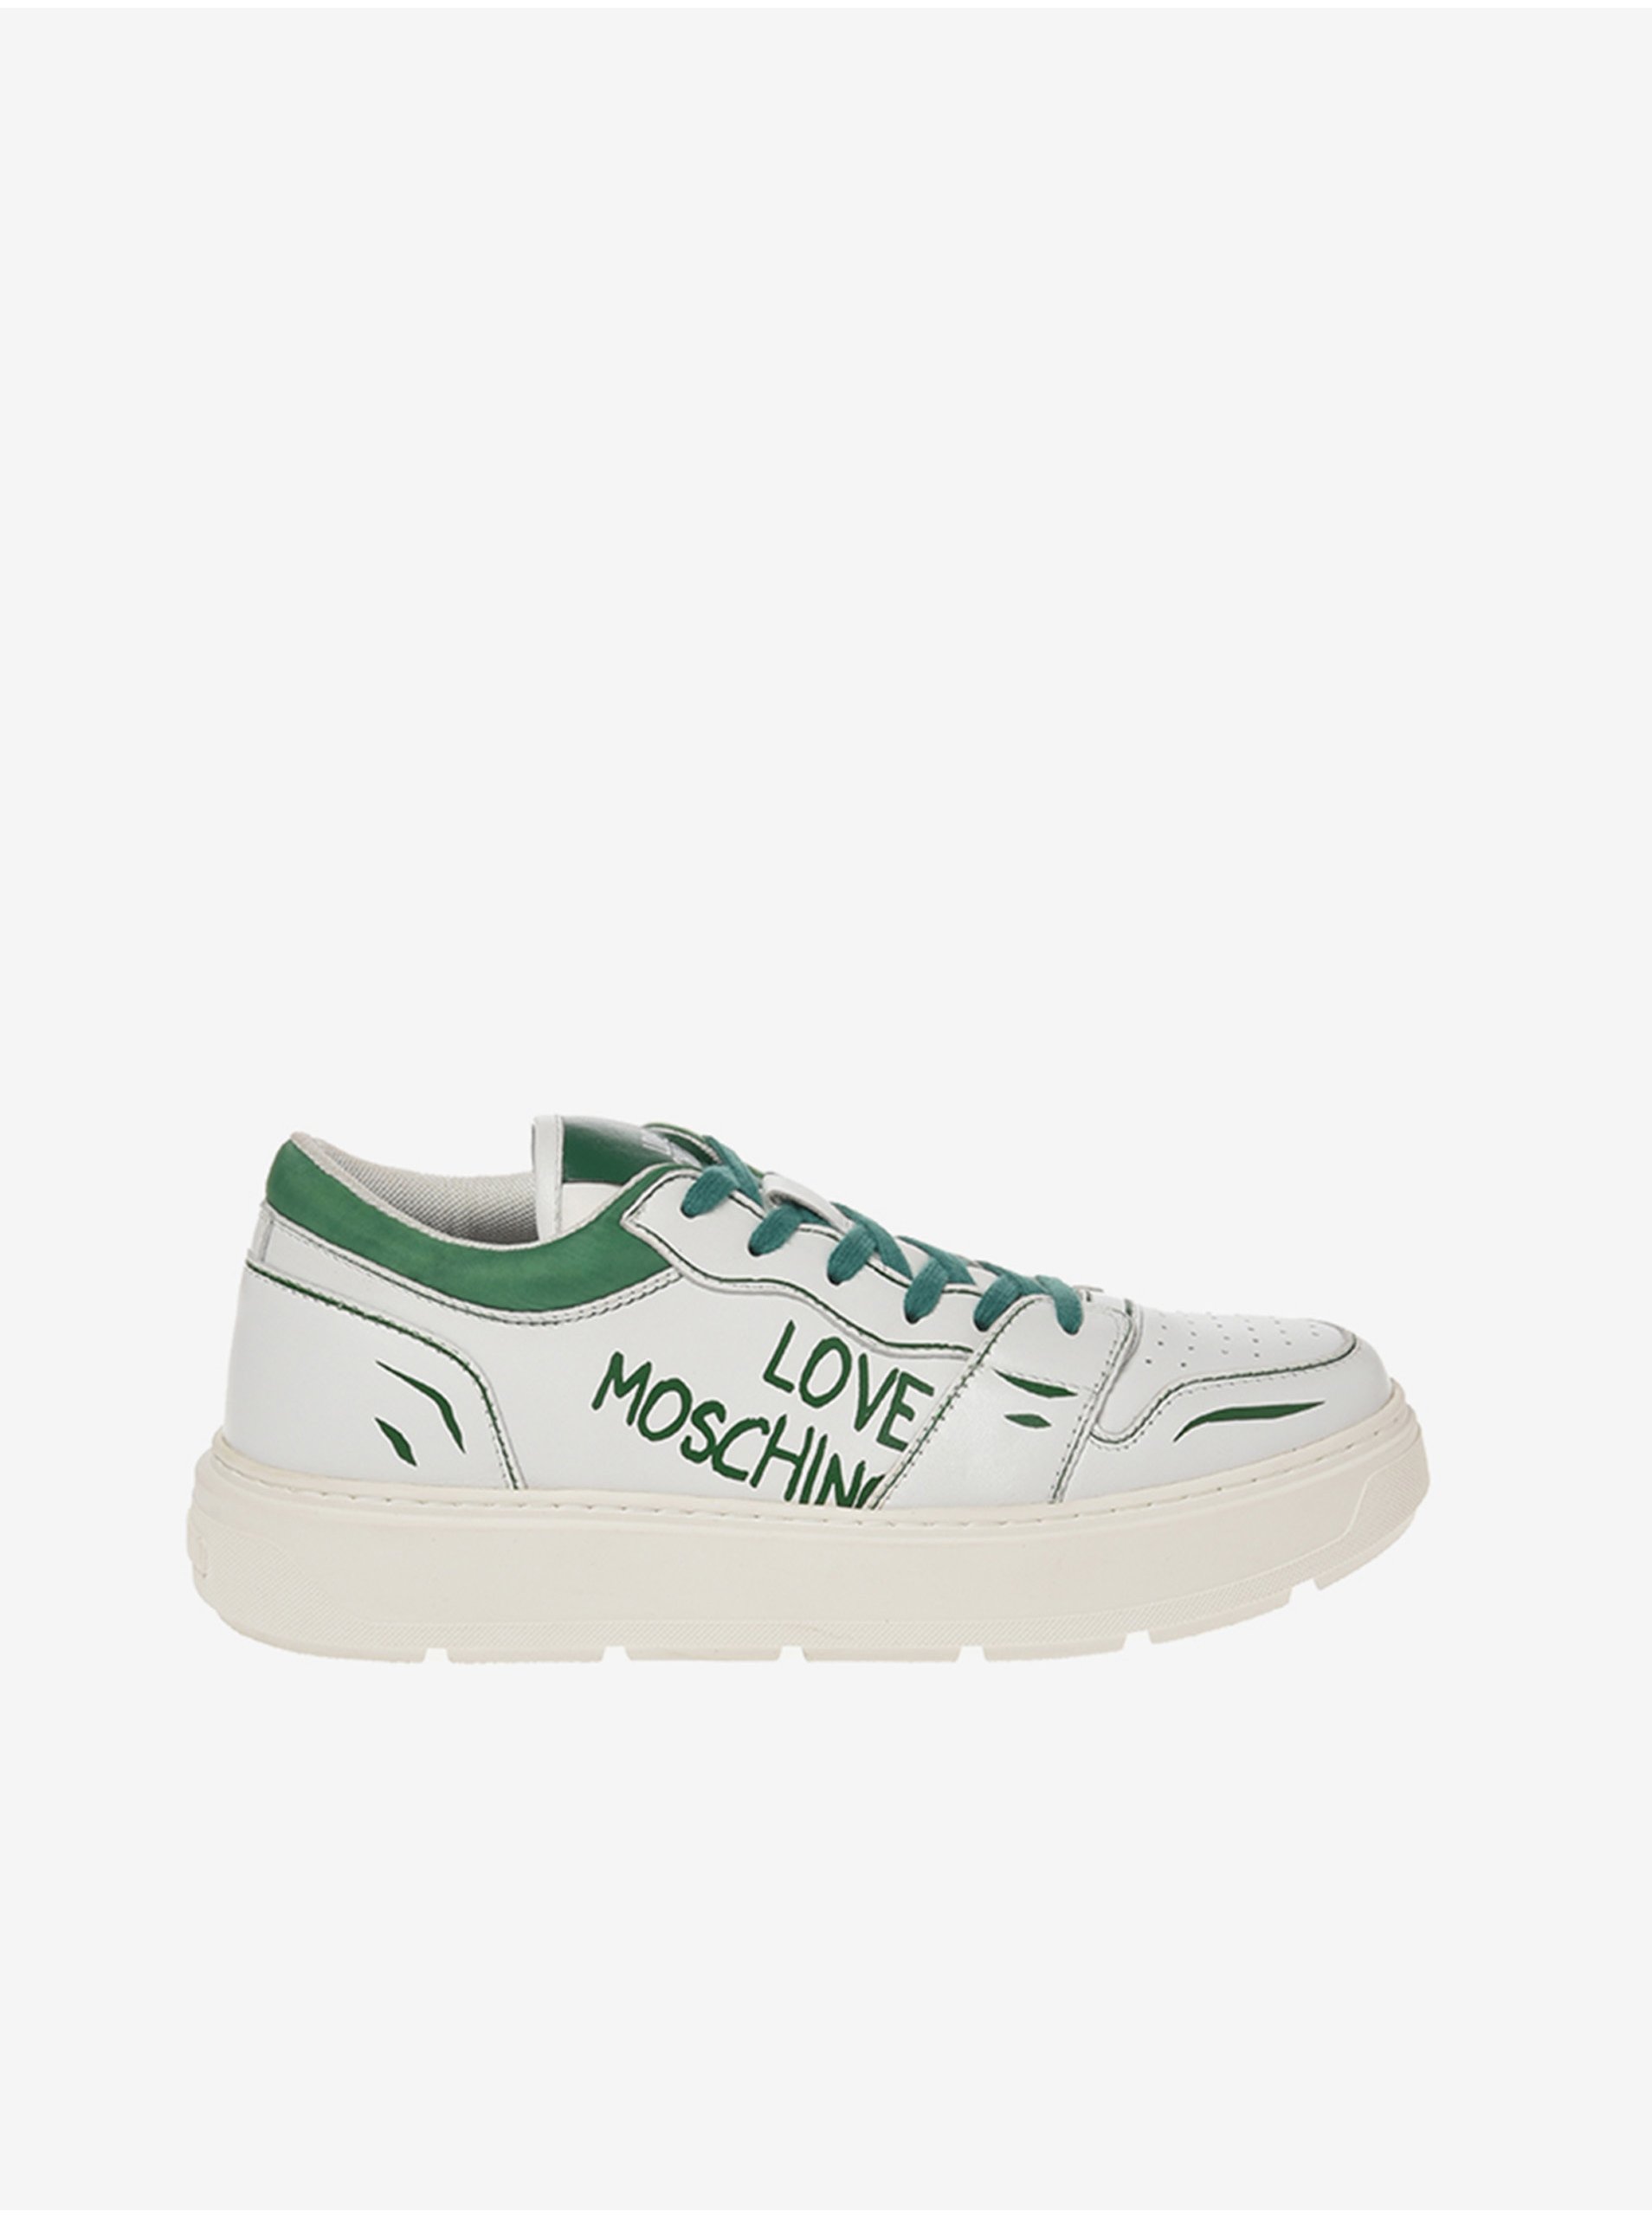 E-shop Zeleno-bílé dámské kožené tenisky Love Moschino